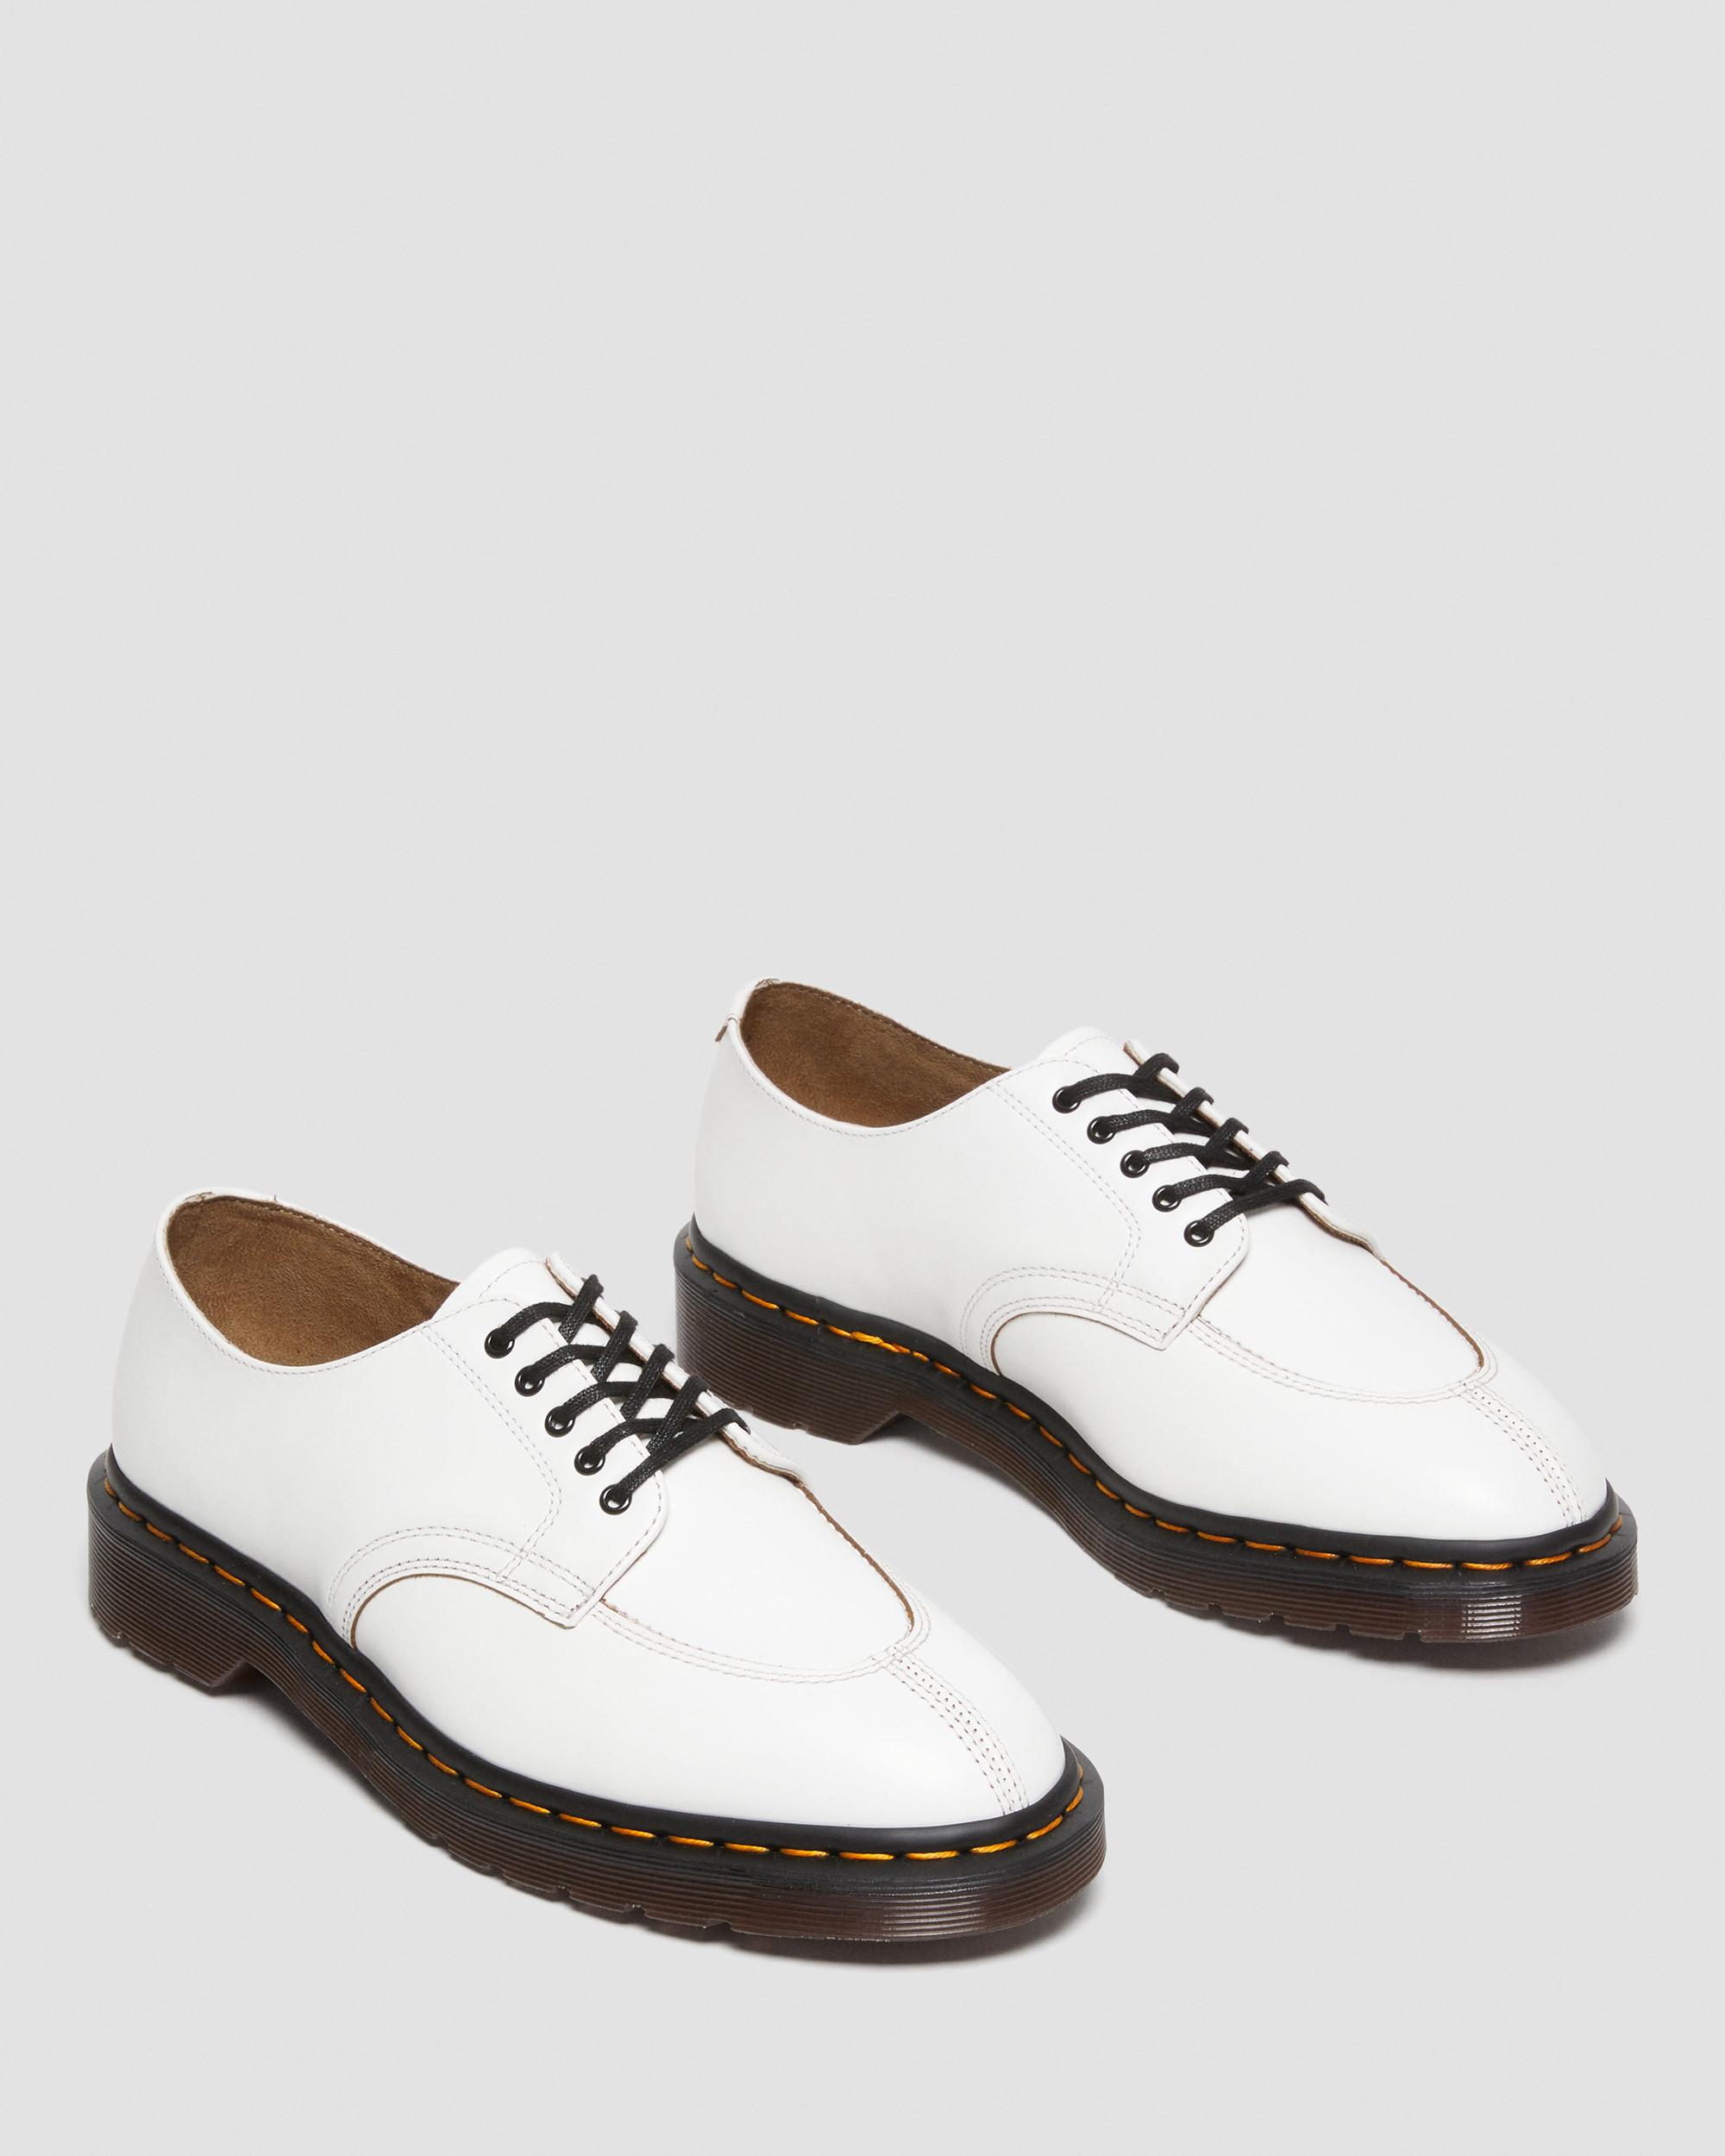 2046 Vintage Smooth Leather Oxford ShoesZapatos 2046 Vintage en piel Smooth Dr. Martens